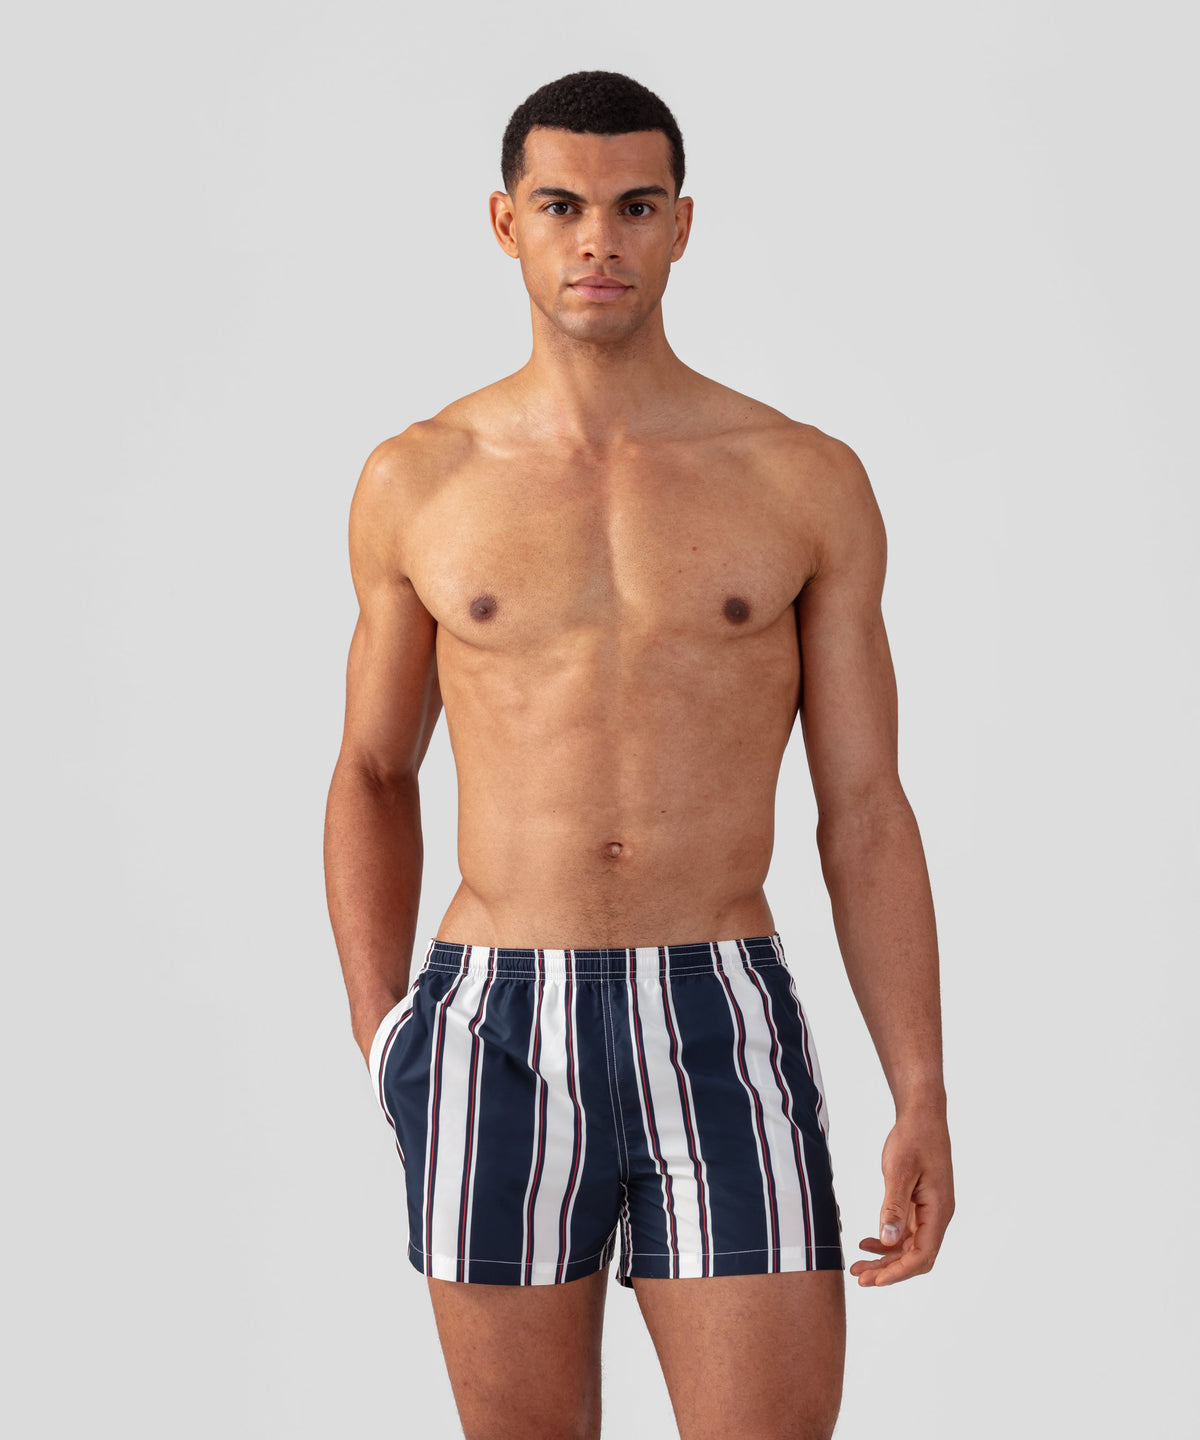 RON DORFF - The new RD Swim Briefs with diagonal stripes as worn by  Ignacio. #RonDorff #Menswear #Swimwear #Stripes #IgnacioOndategui  @ignacioondategui @smiggi Find the collection